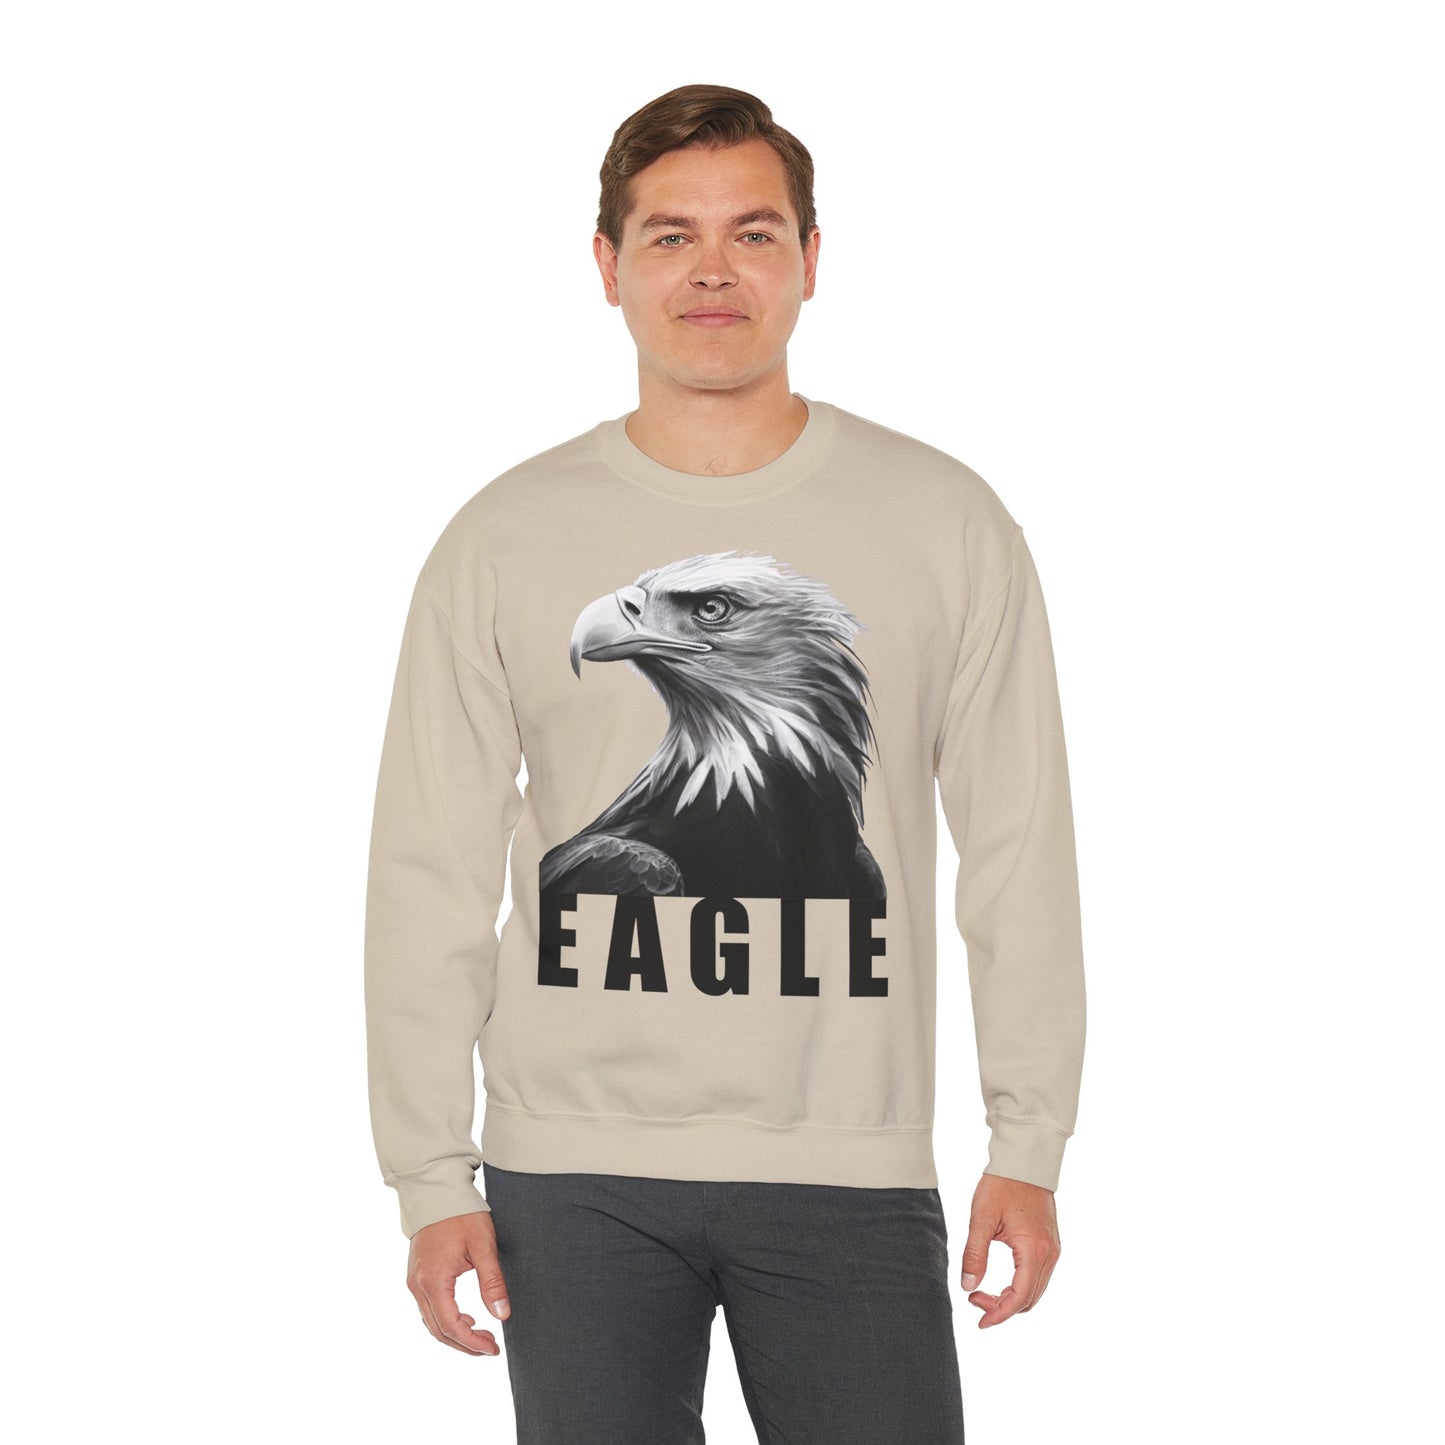 Eagle, Black&White, Women's and Men's Unisex, Crew Neck Sweatshirt